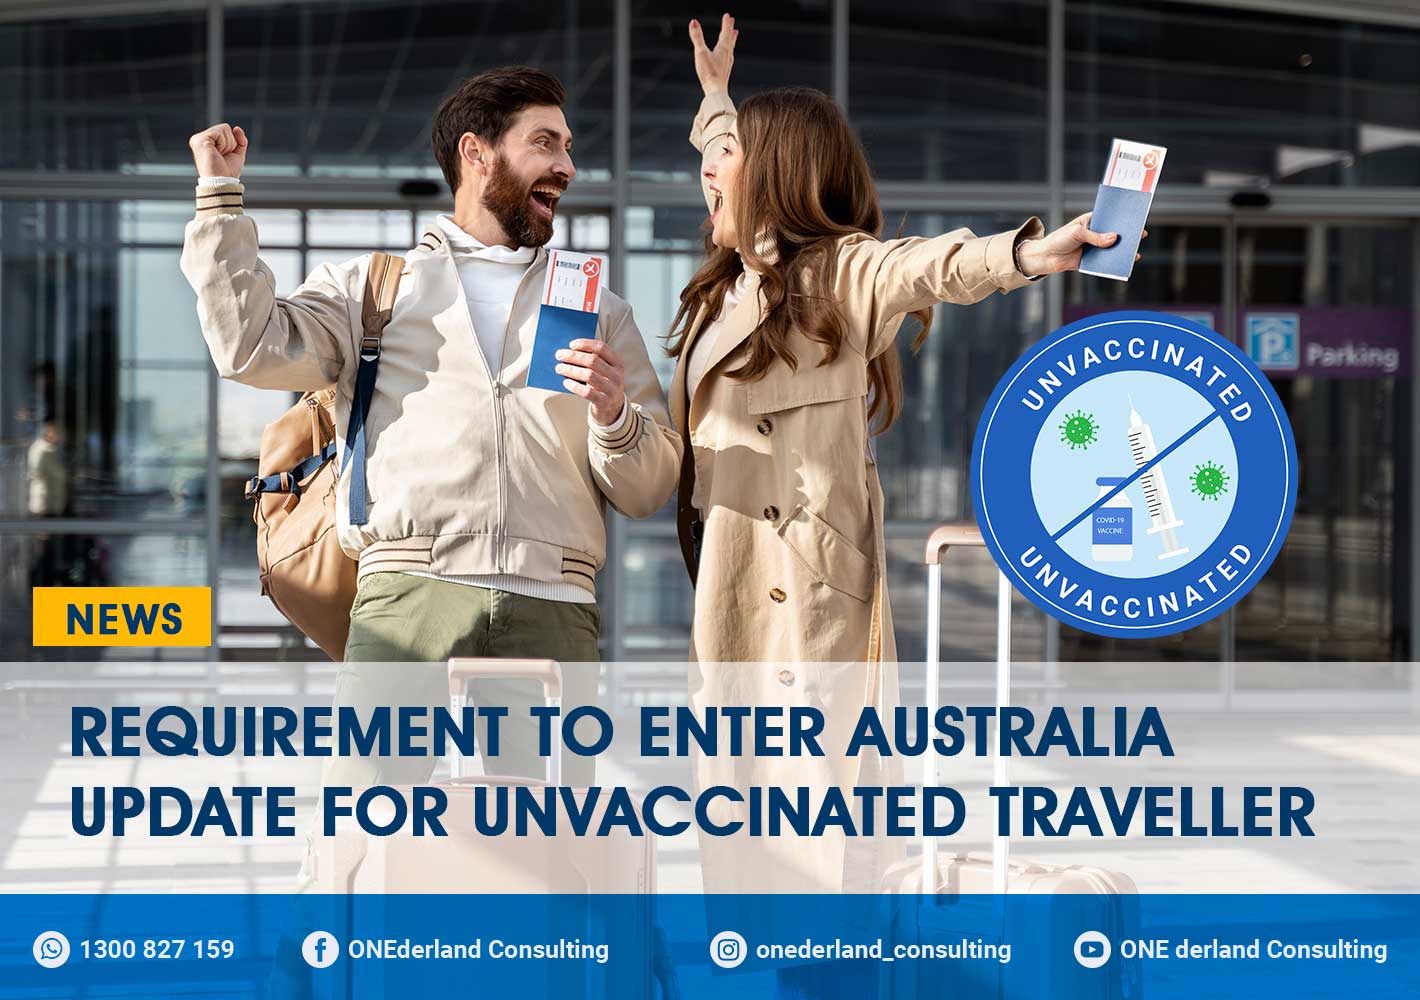 BREAKING NEWS! Australia Opens International Border for Unvaccinated Traveller